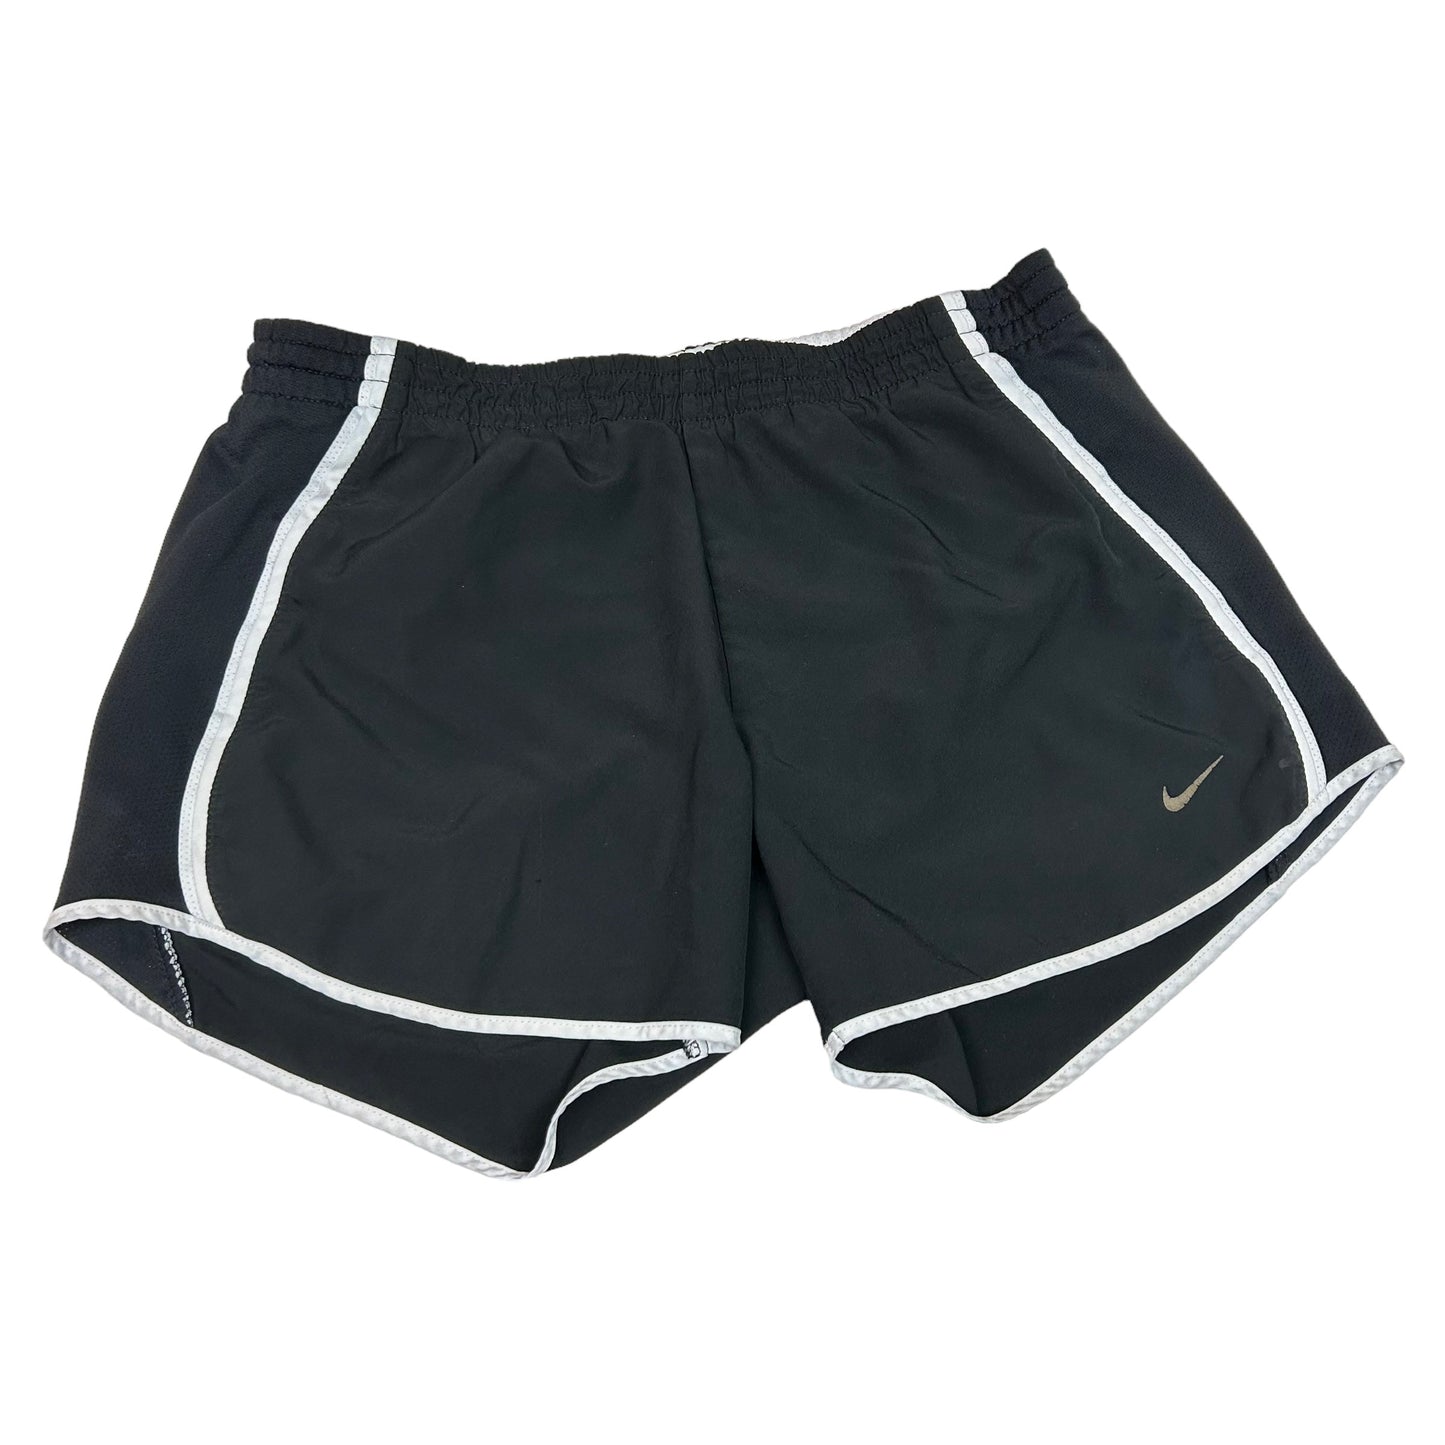 Black & White Athletic Shorts Nike Apparel, Size S